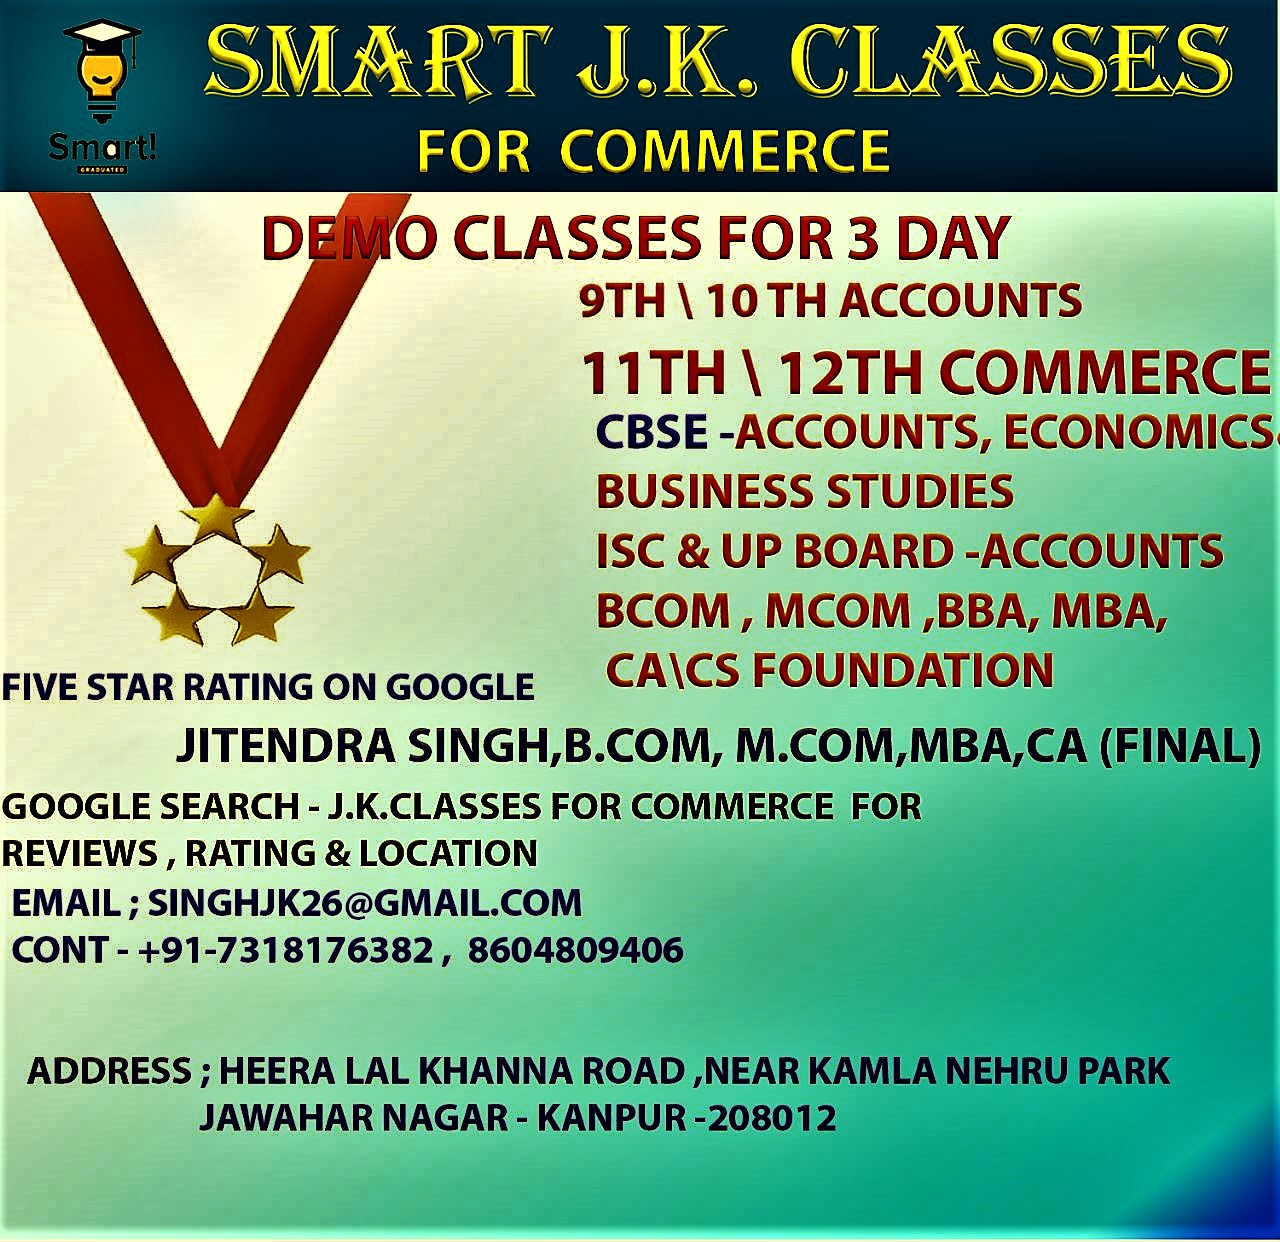 24089SMART JK.CLASSES COMMERCE
11th & 12th
Accounts Economics Business Studies